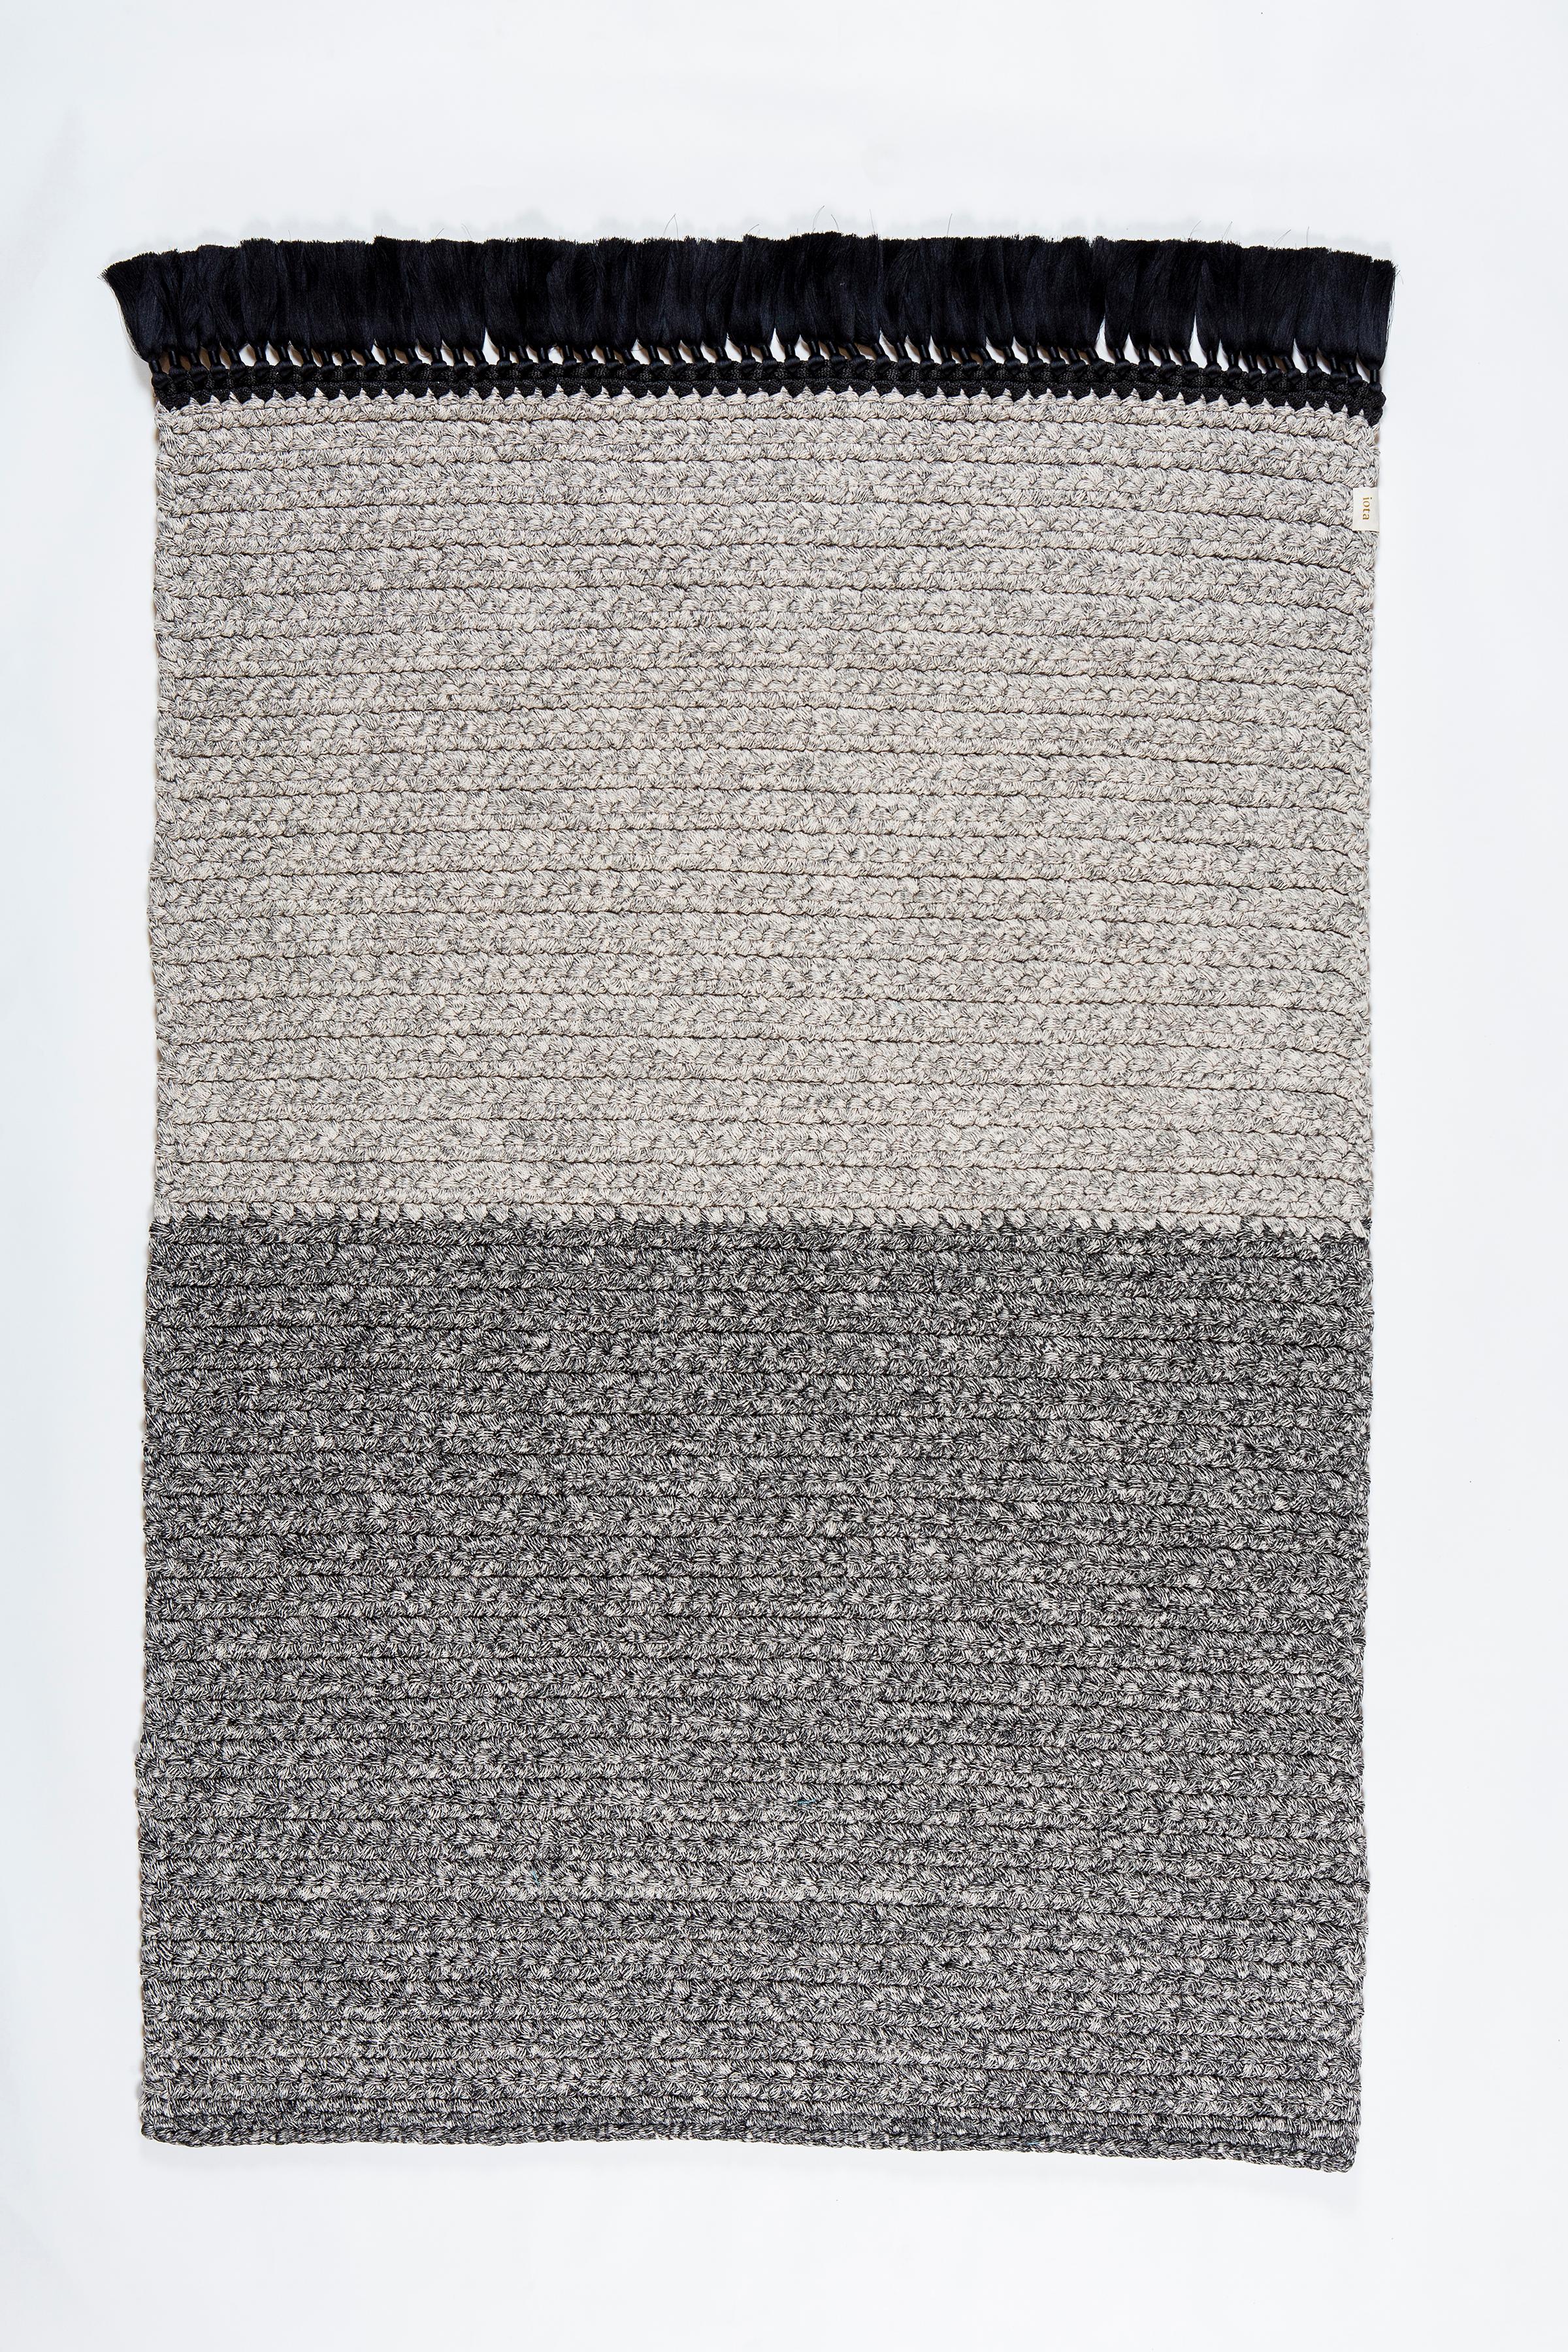 Handmade Crochet Two-Tone Rug in Black Made of iota's Bespoke Yarns For Sale 3